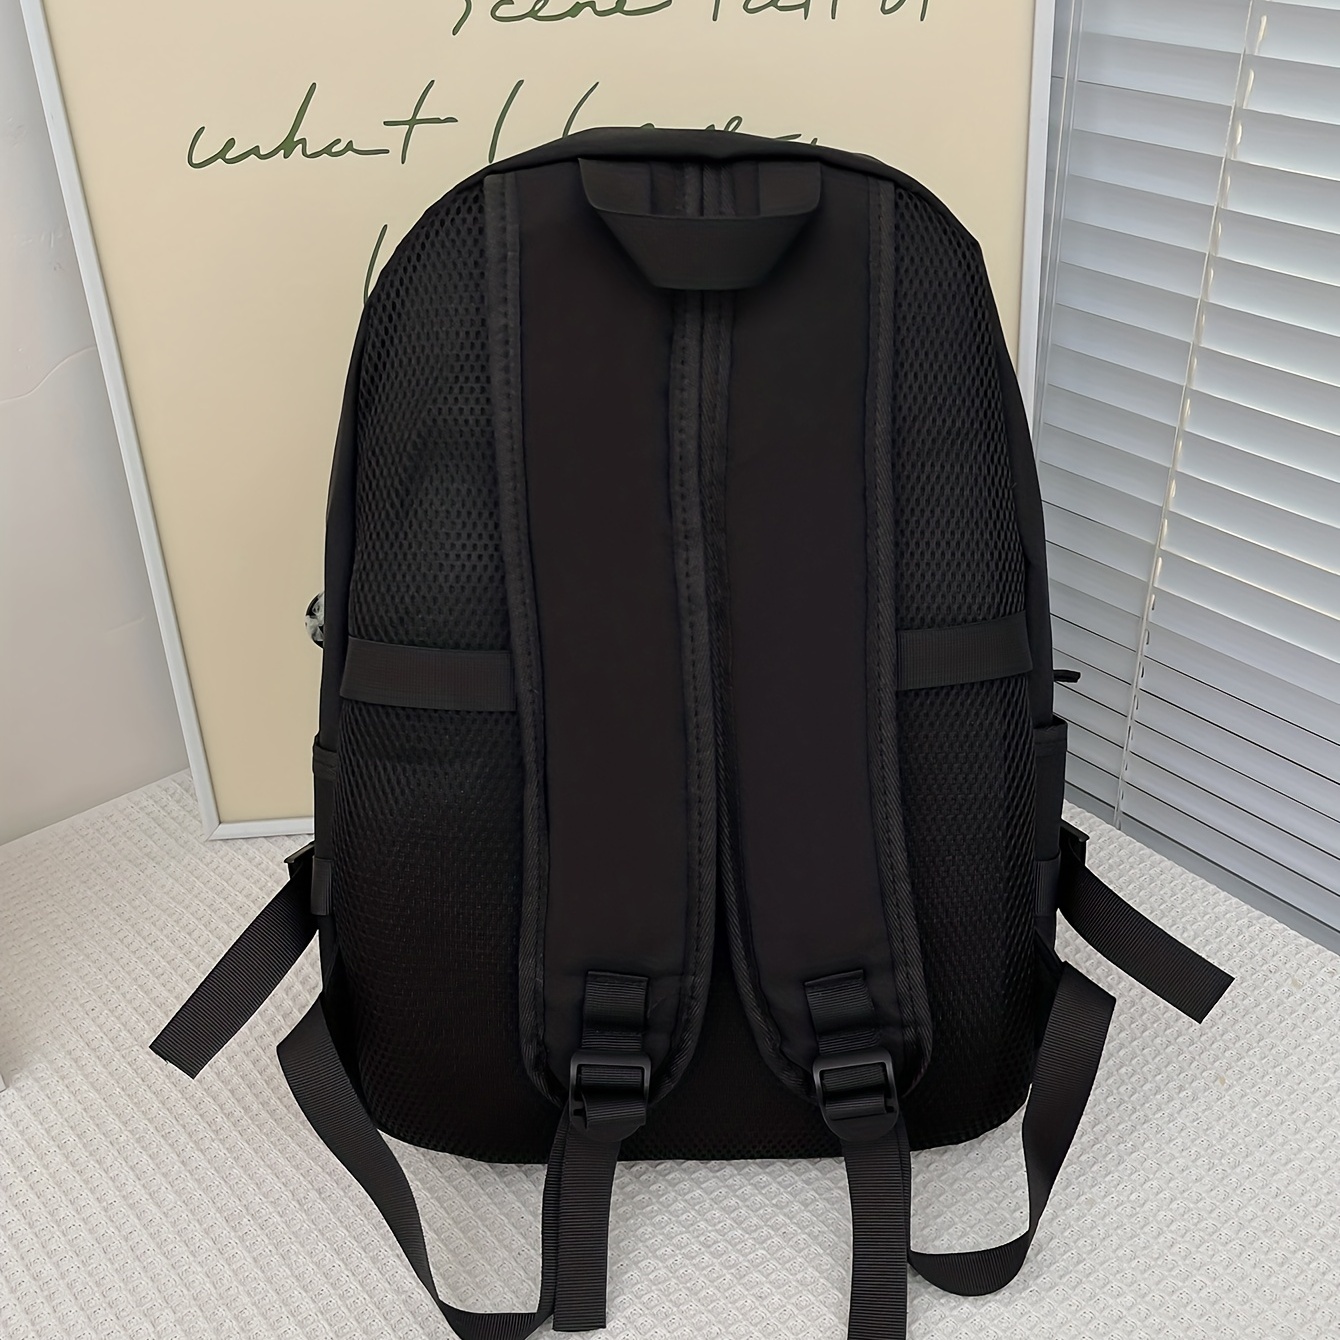 Supreme (SS18) Backpack Black  Backpacks, Supreme backpack, Bags